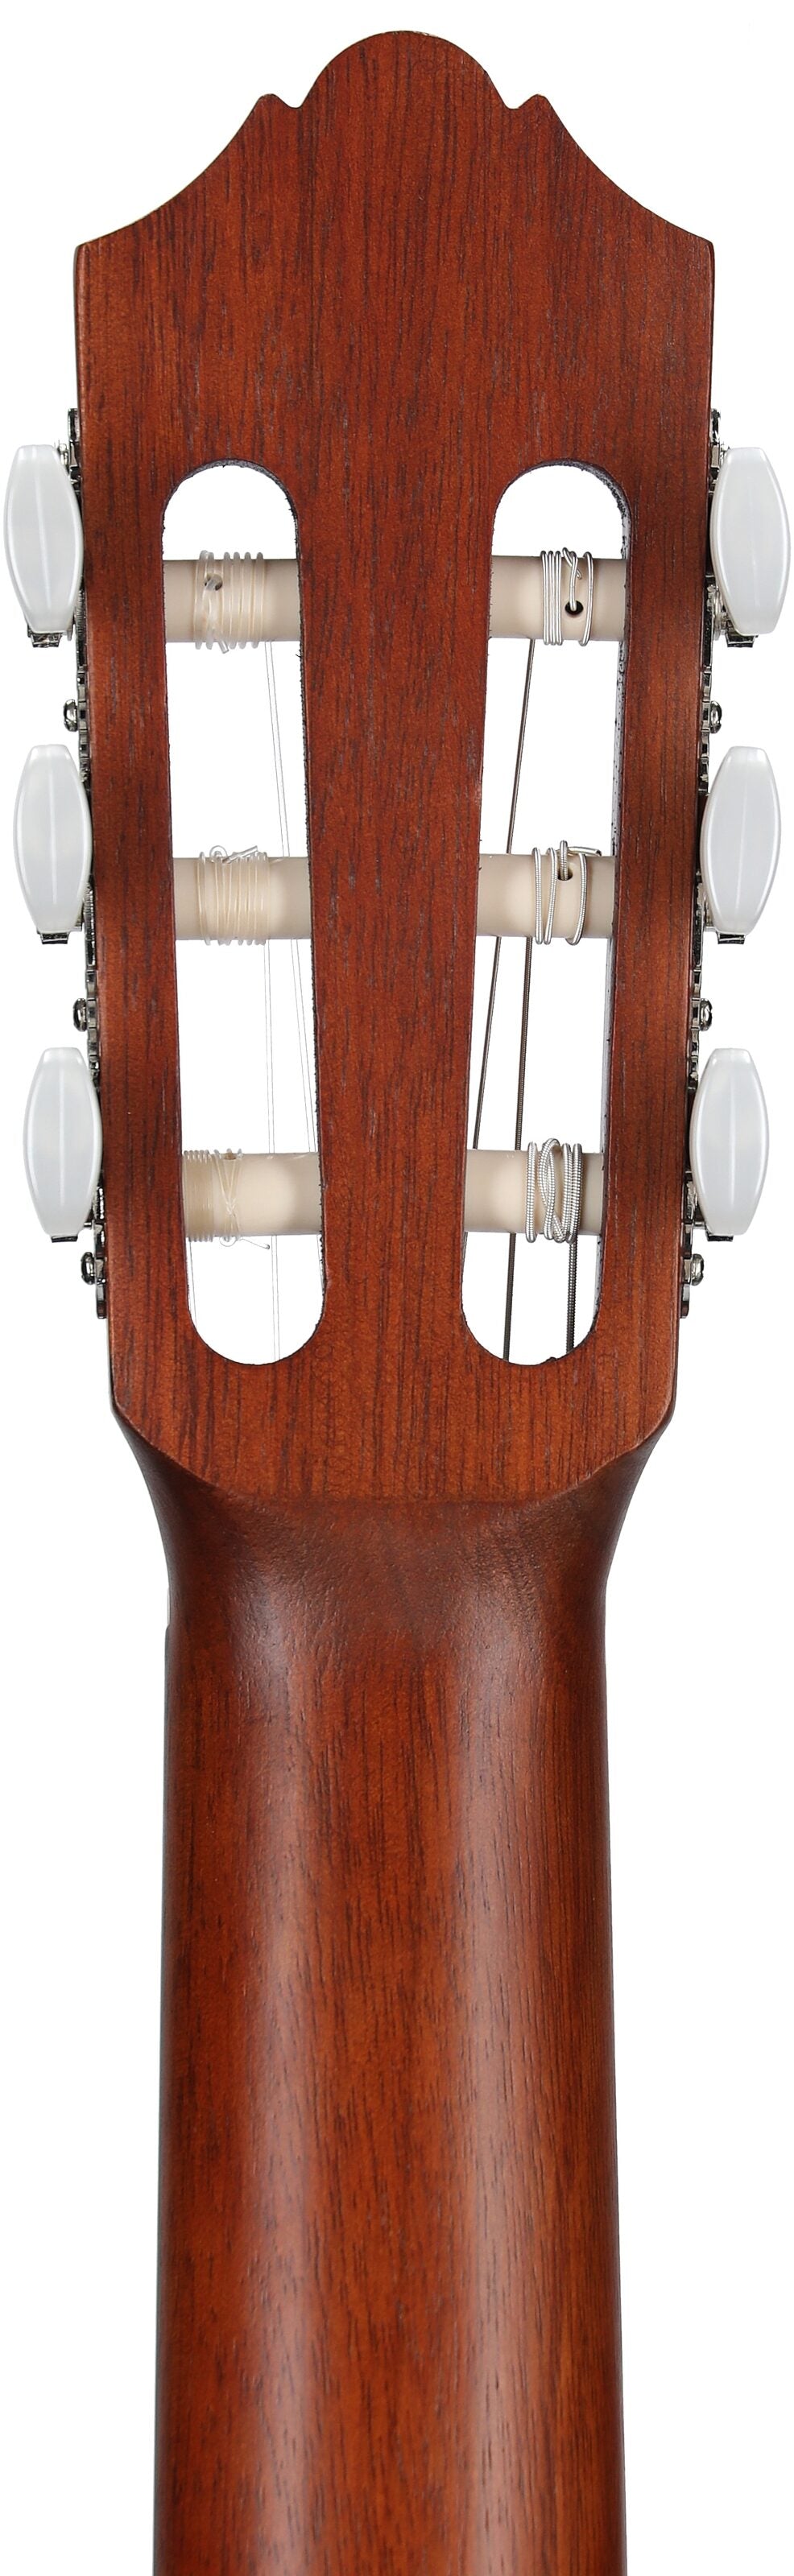 Yamaha CGX122MC NT Acoustic Electric Classical Guitar w Solid Cedar Top